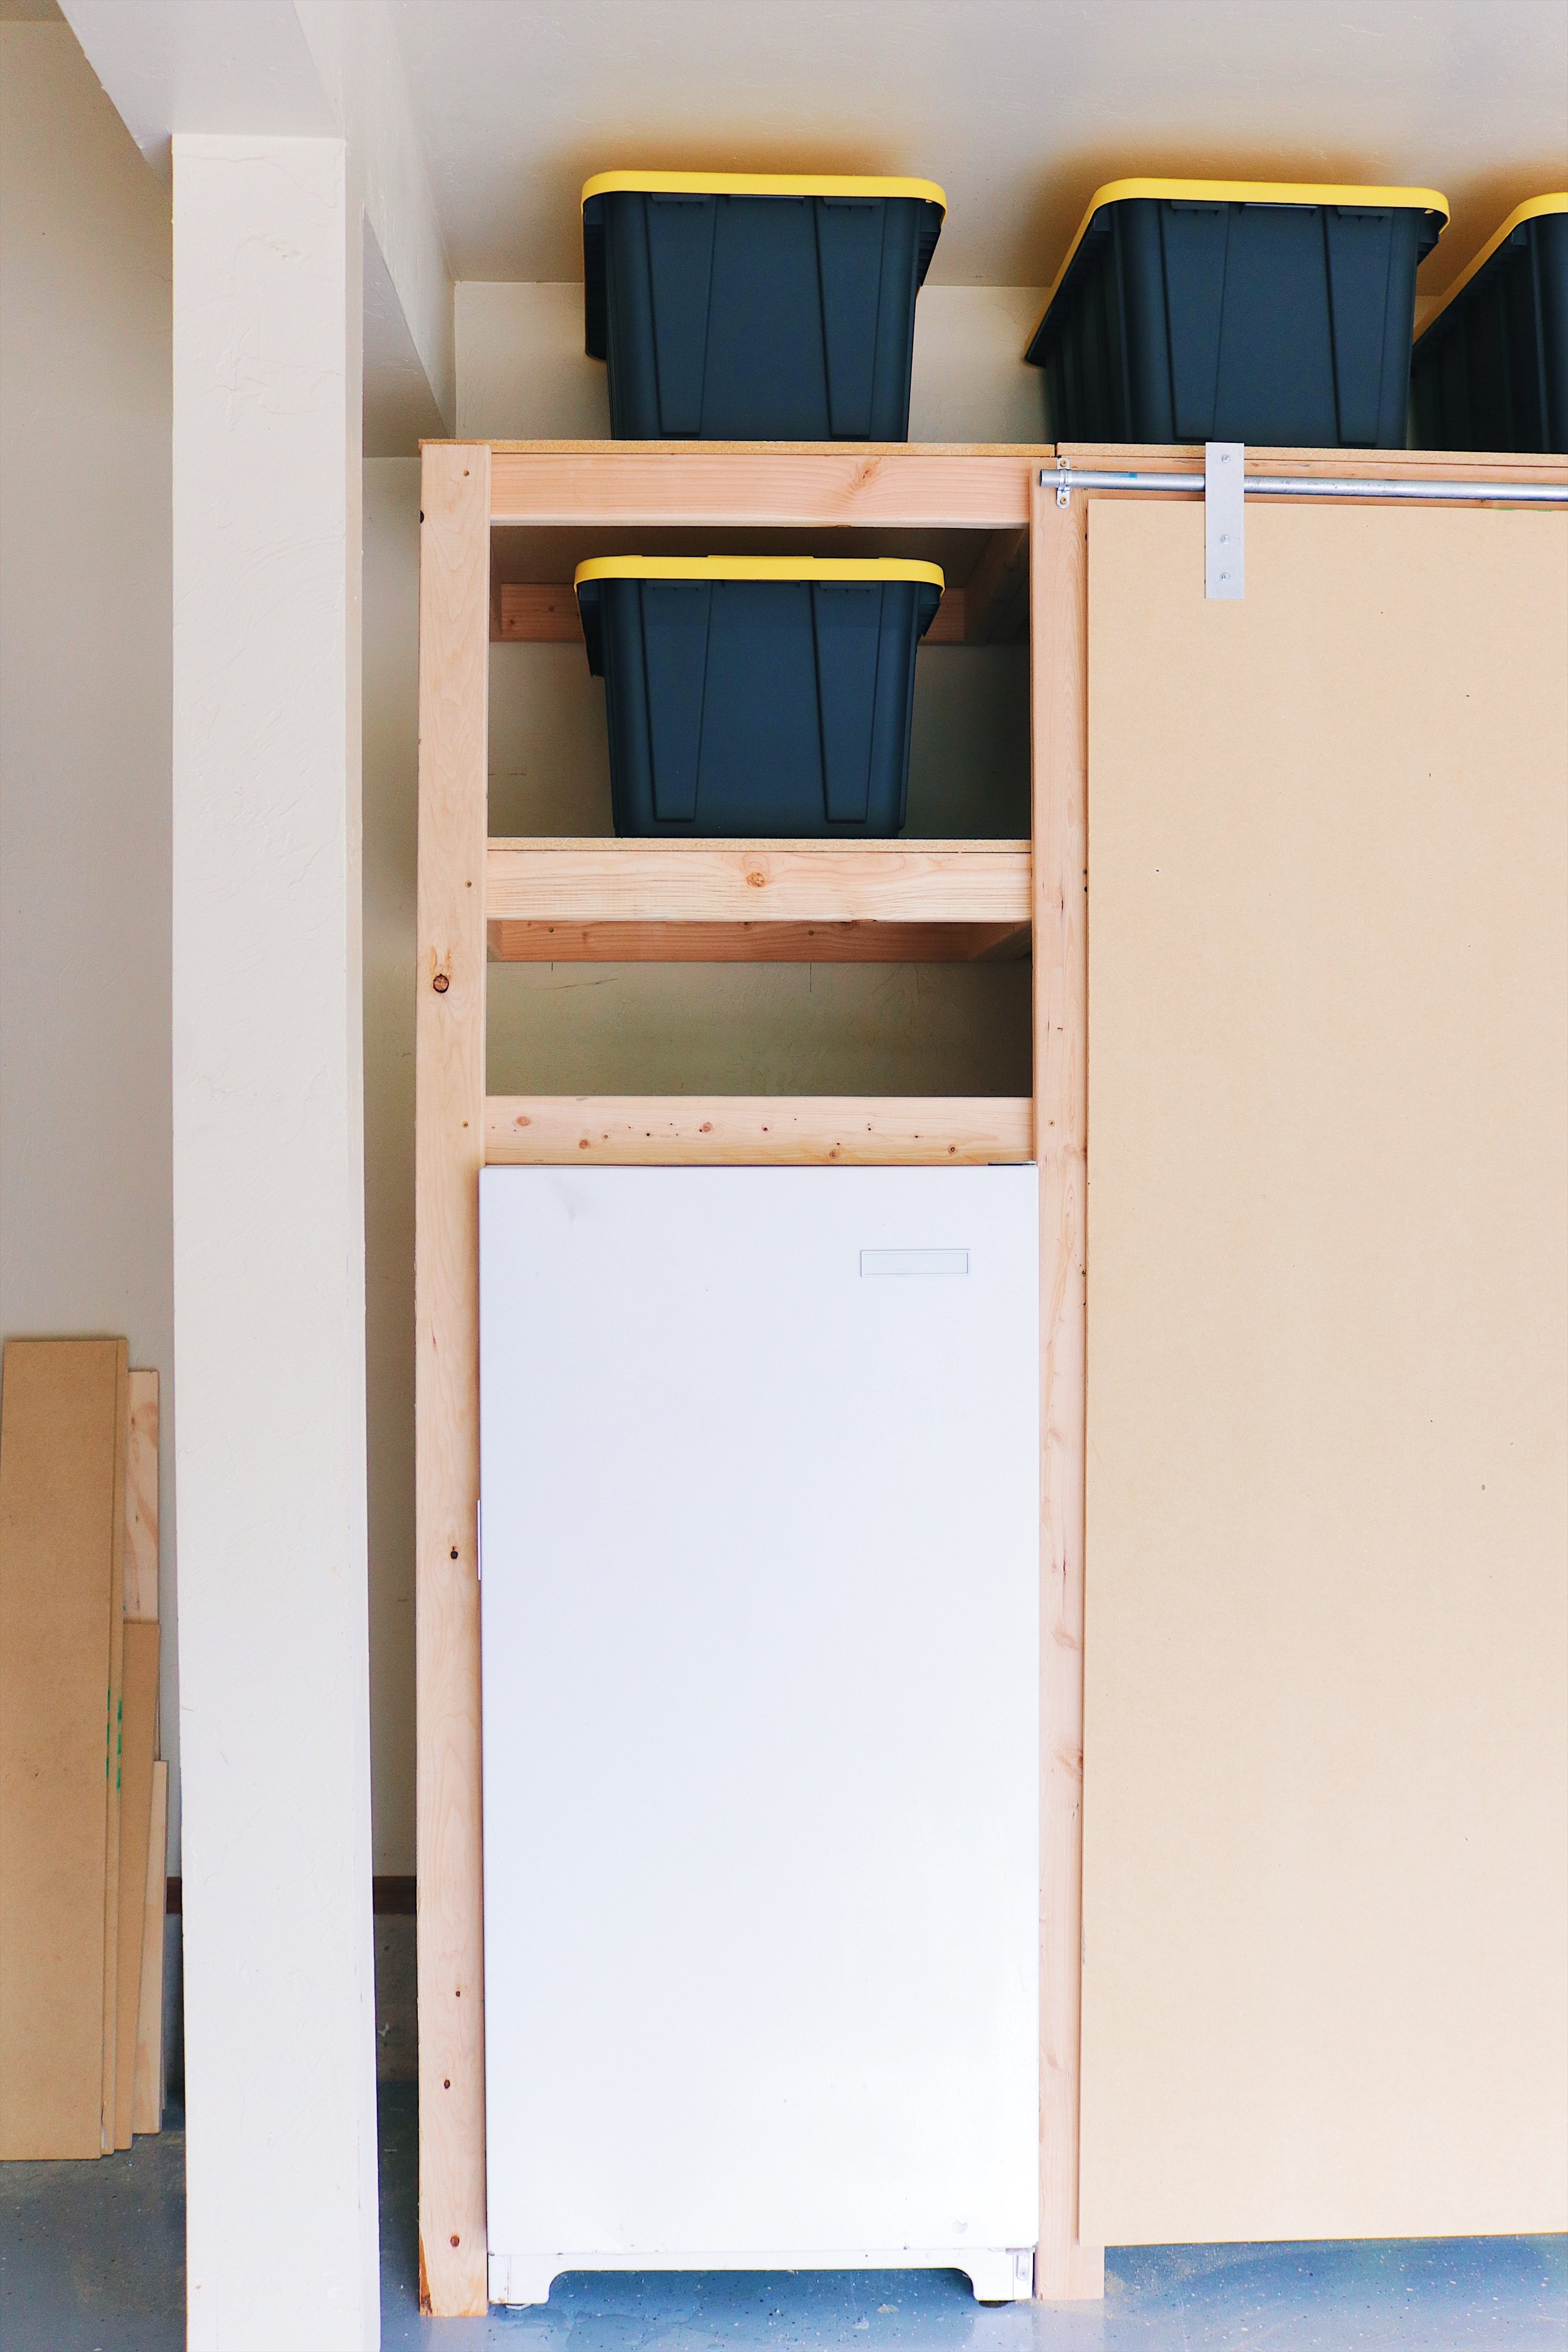 Sliding Storage Shelves  How to Make DIY Garage Storage Shelves